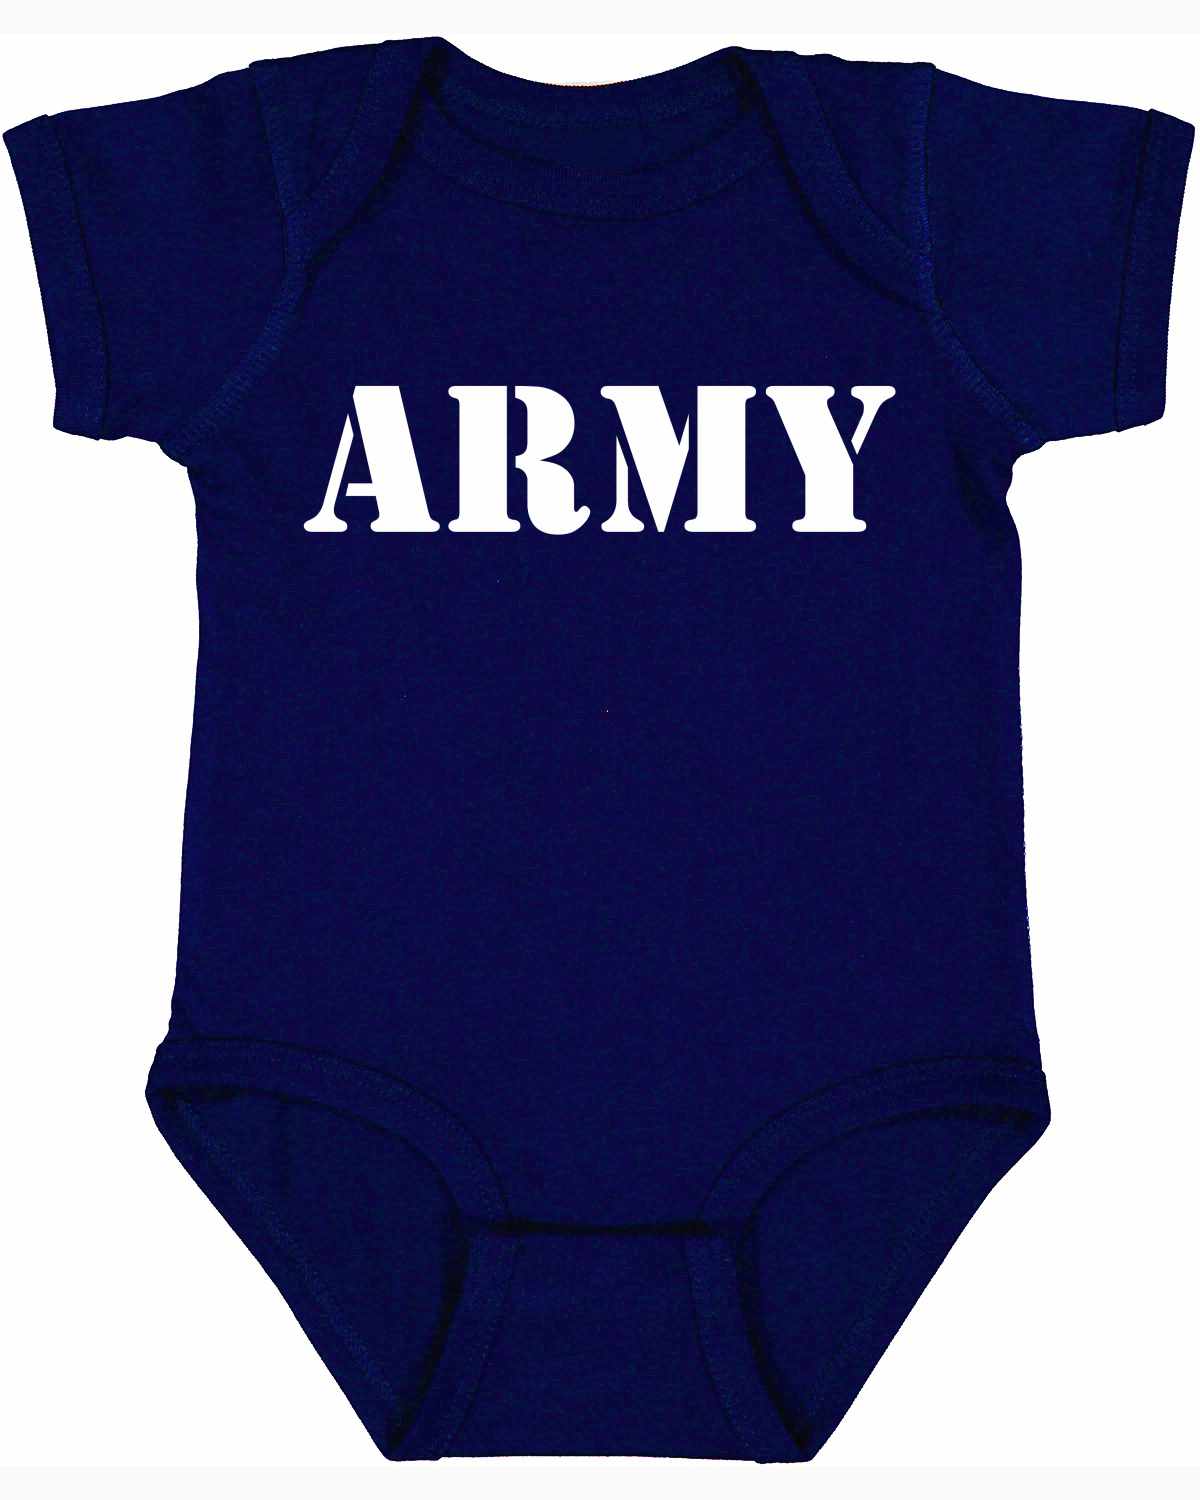 ARMY on Infant BodySuit (#338-10)